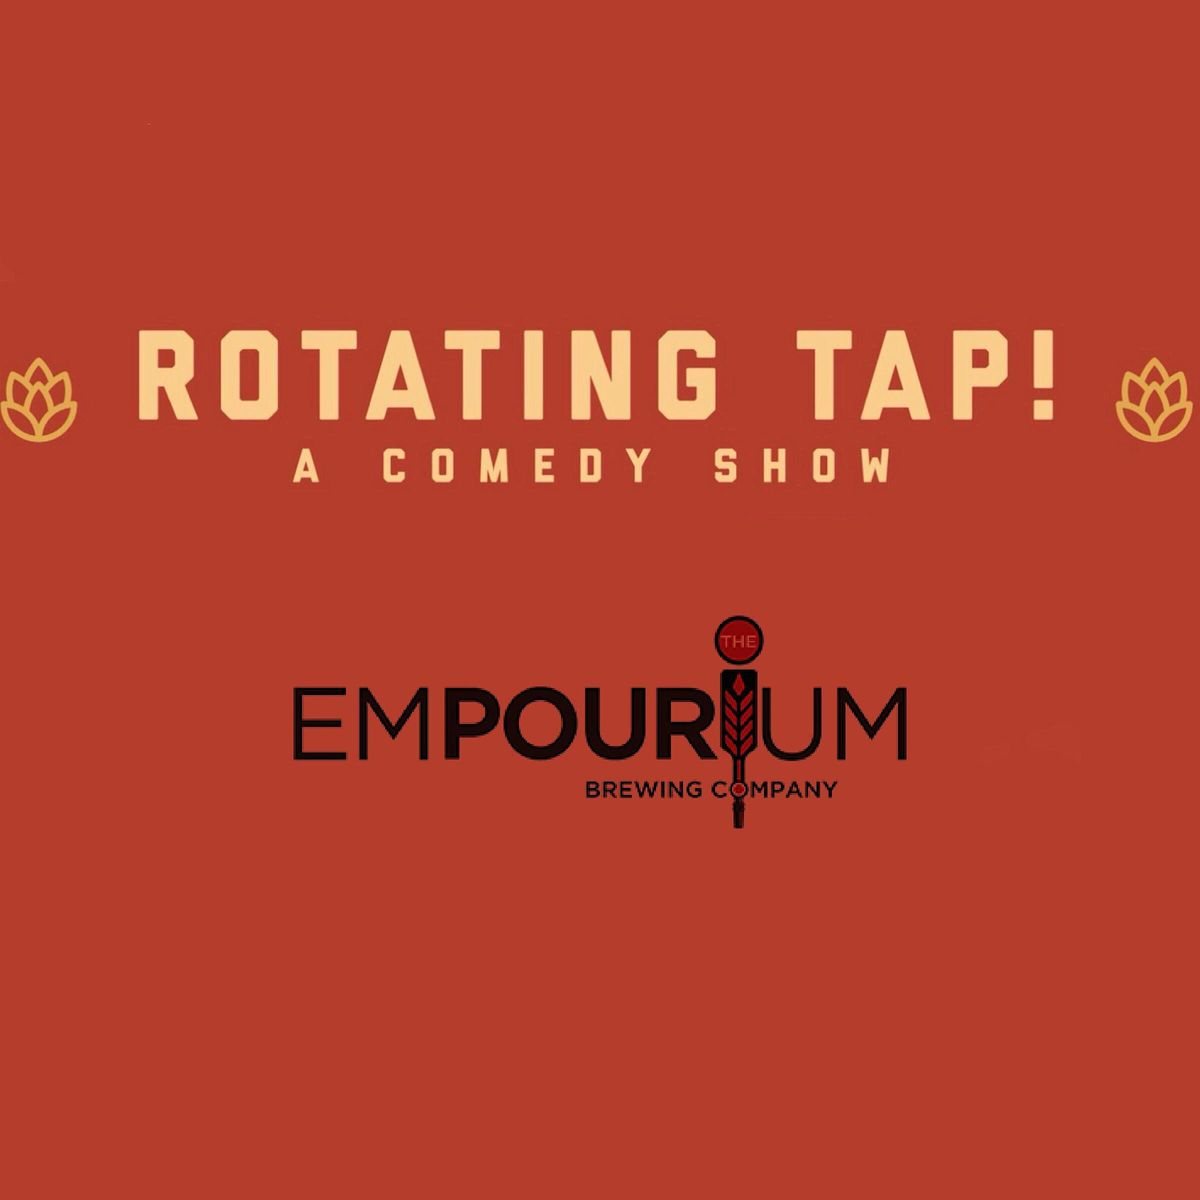 Rotating Tap Comedy @ The Empourium Brewing Company